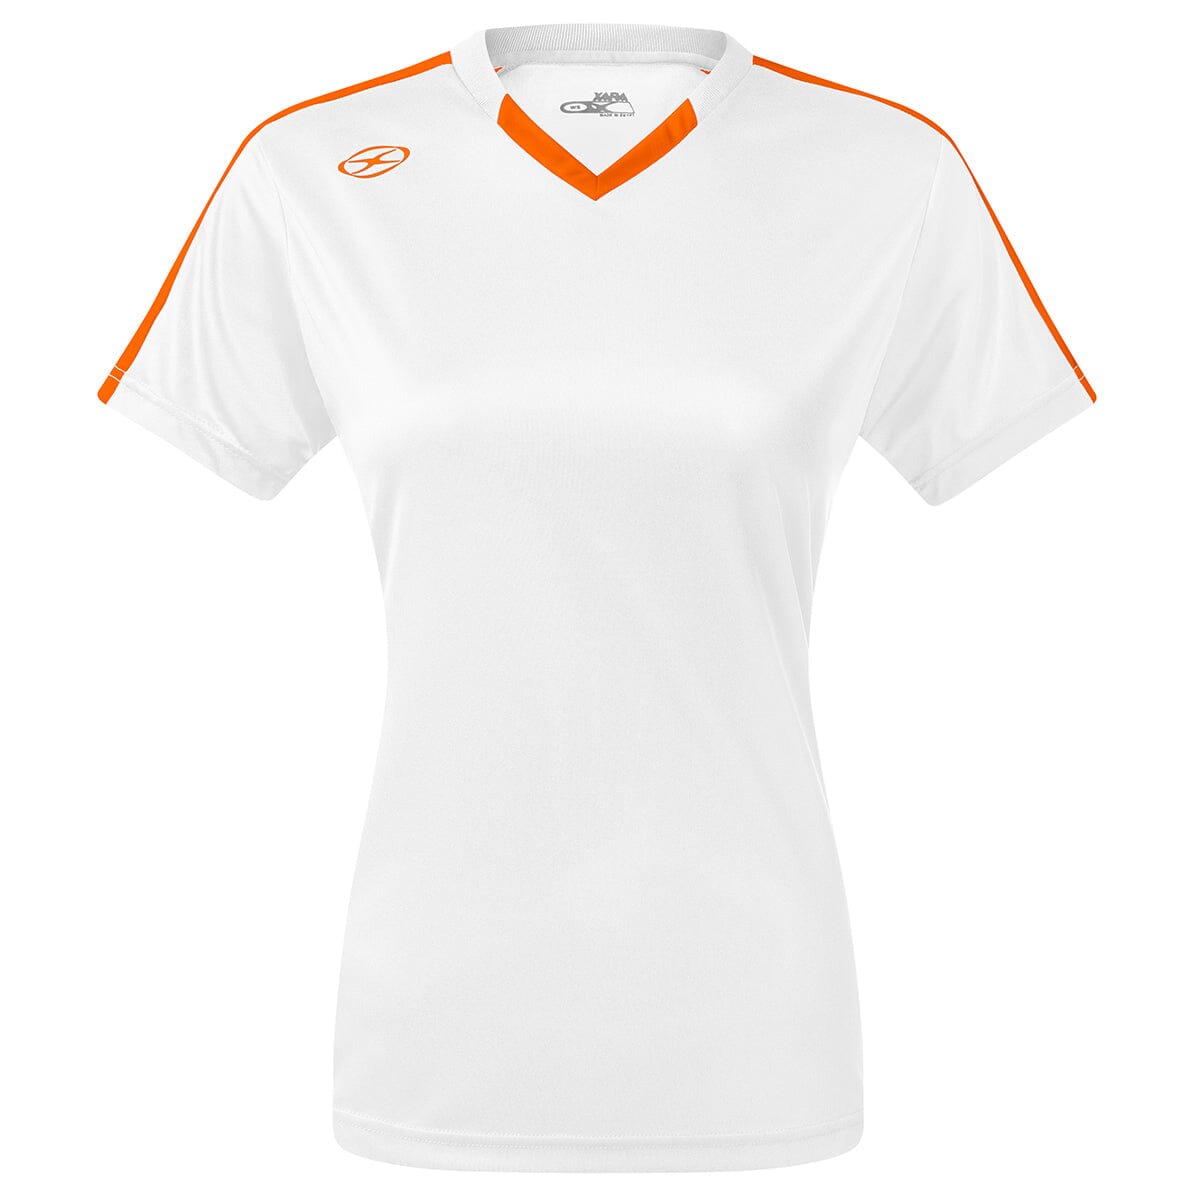 Britannia Jersey - Away Colors - Female Shirt Xara Soccer White/Orange Womens Small 